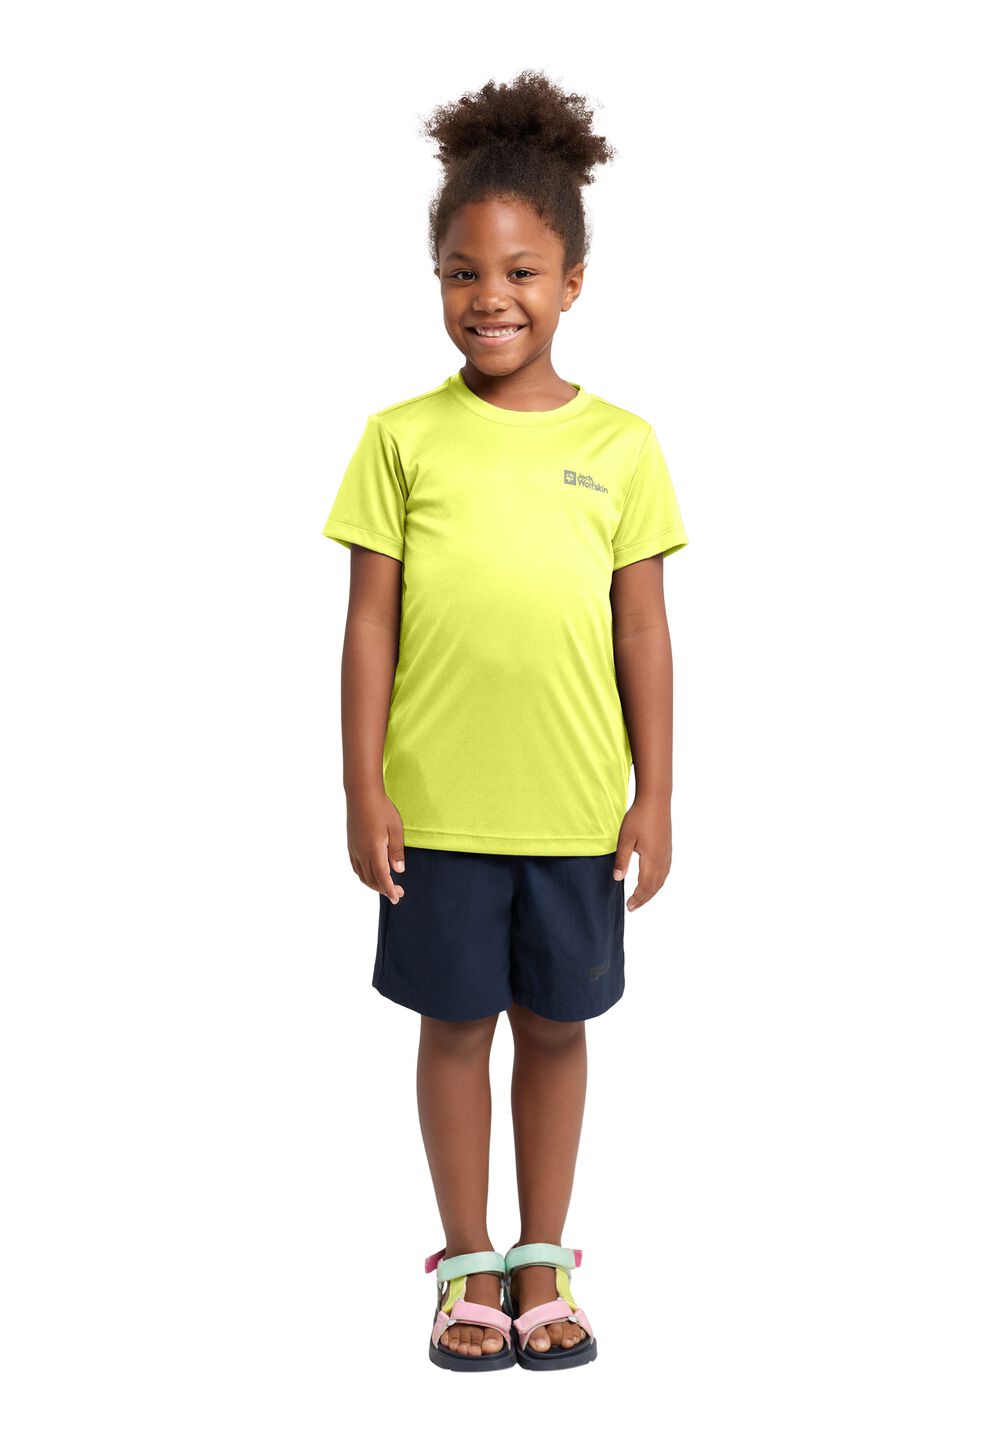 Jack Wolfskin Active Solid T-Shirt Kids Functioneel shirt Kinderen 164 oranje firefly